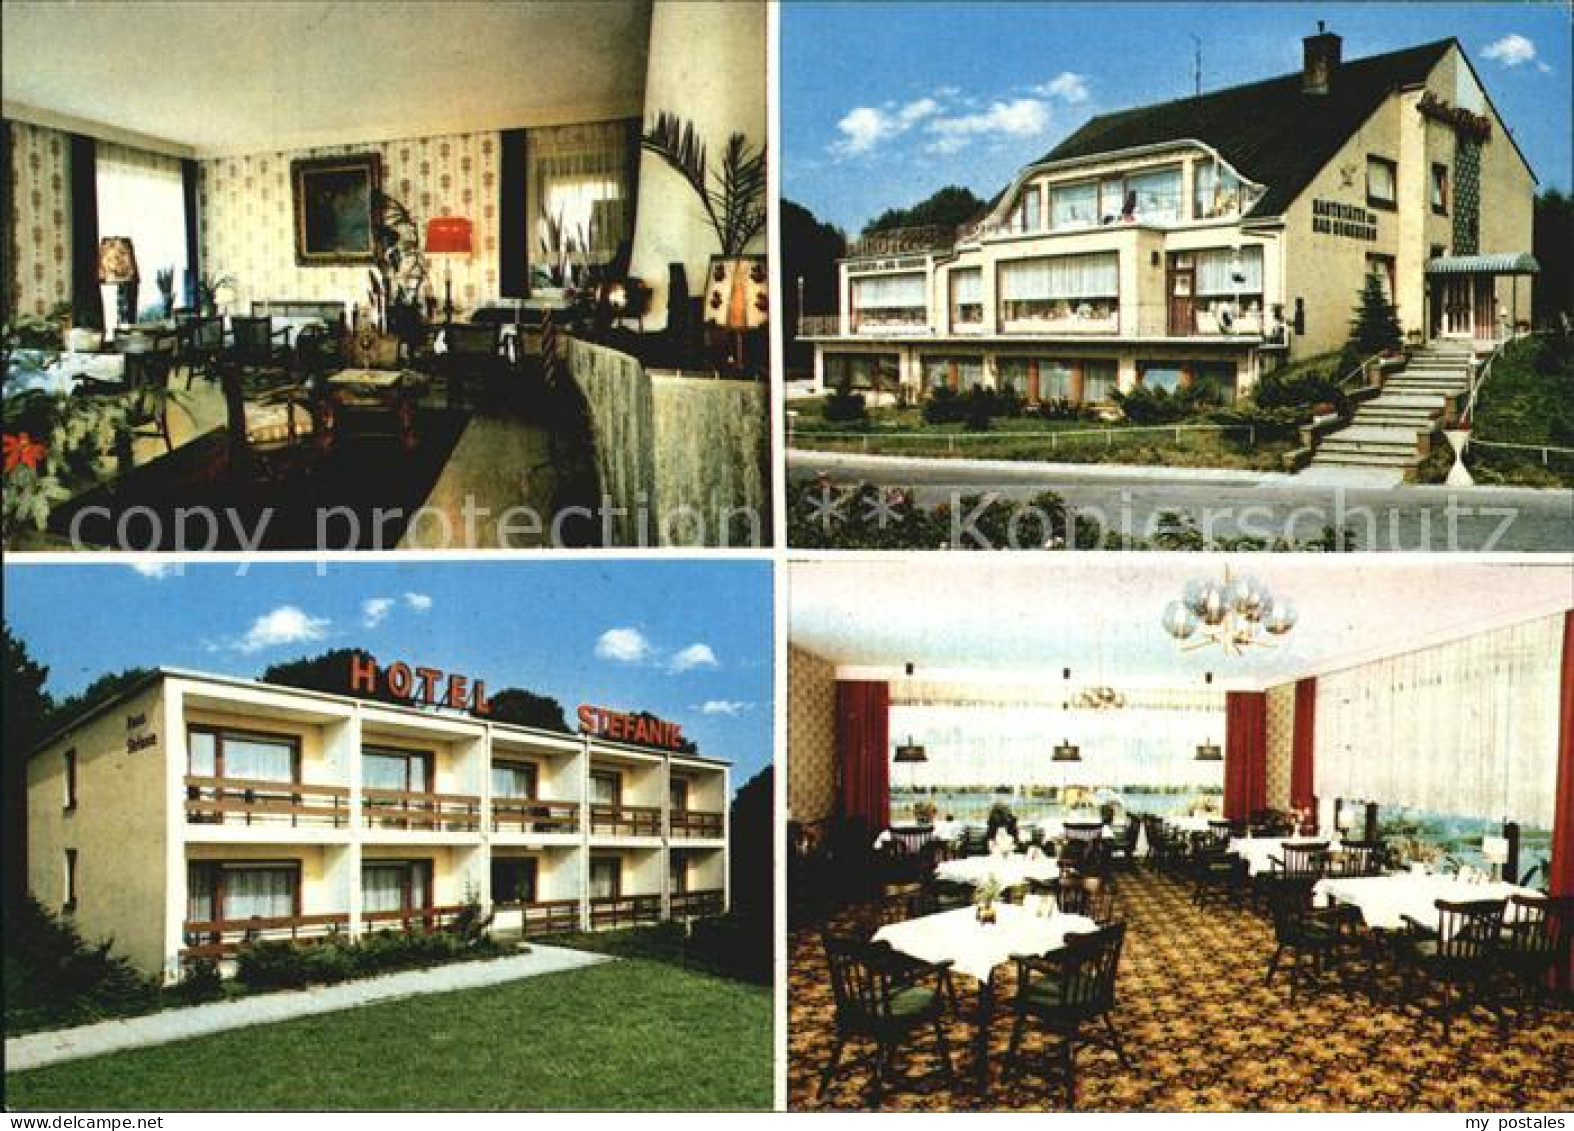 72522508 Bad Segeberg Hotel Haus Stefanie Bad Segeberg - Bad Segeberg